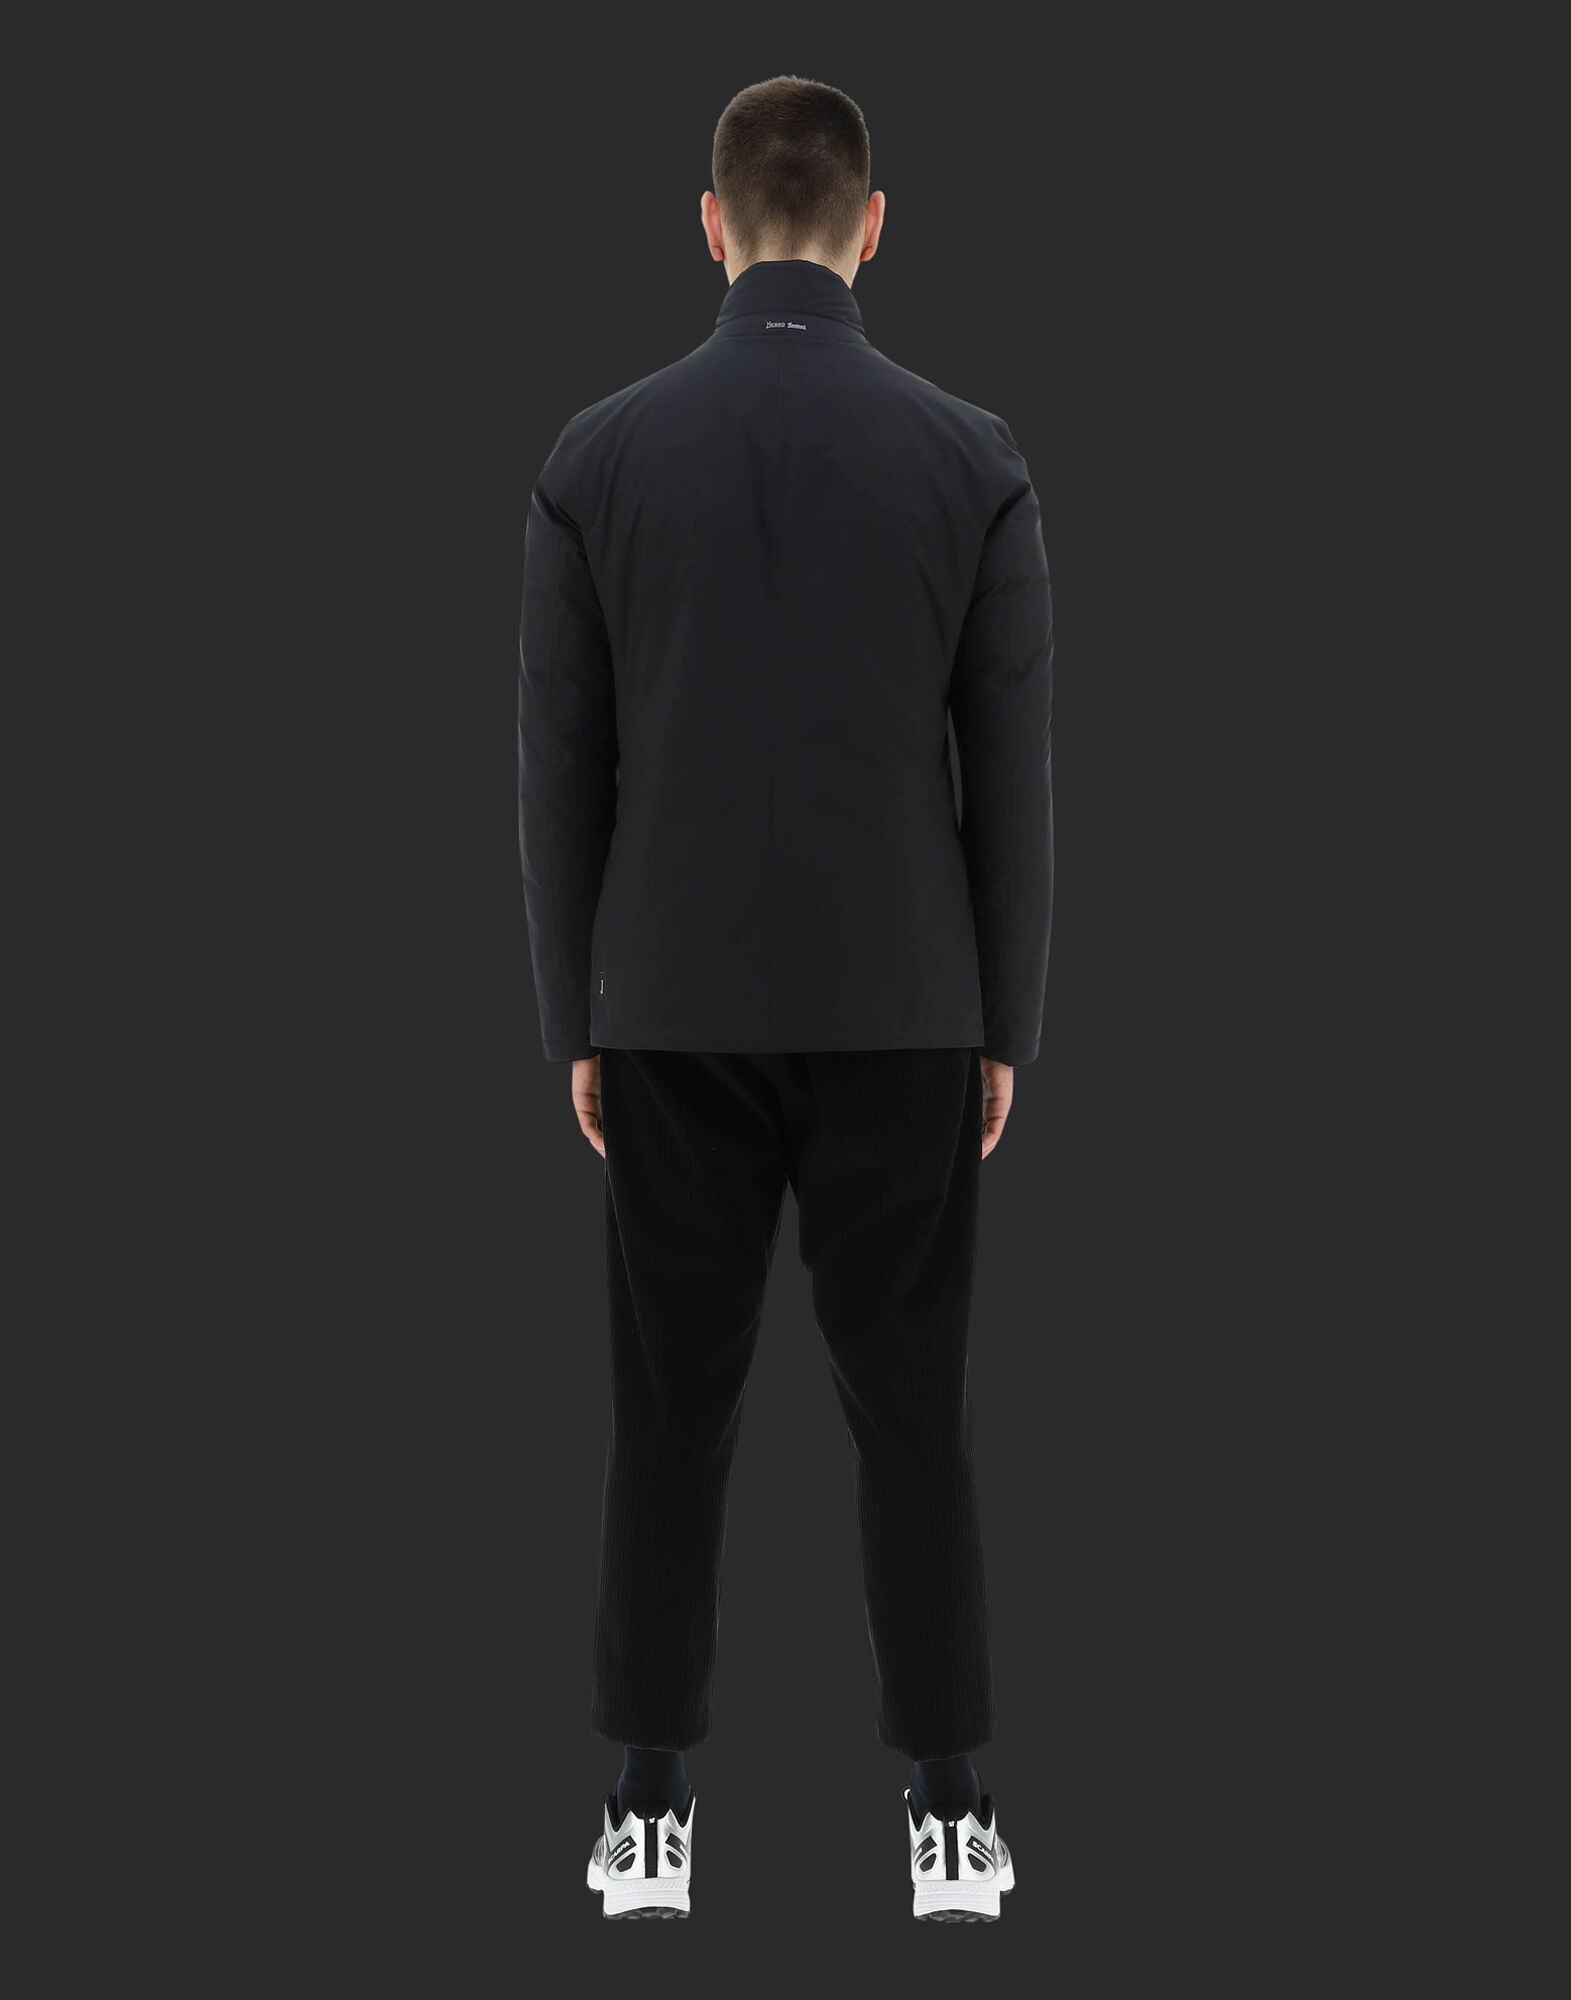 LAMINAR GORE-TEX 2LAYER COAT in Black for Men | Herno®